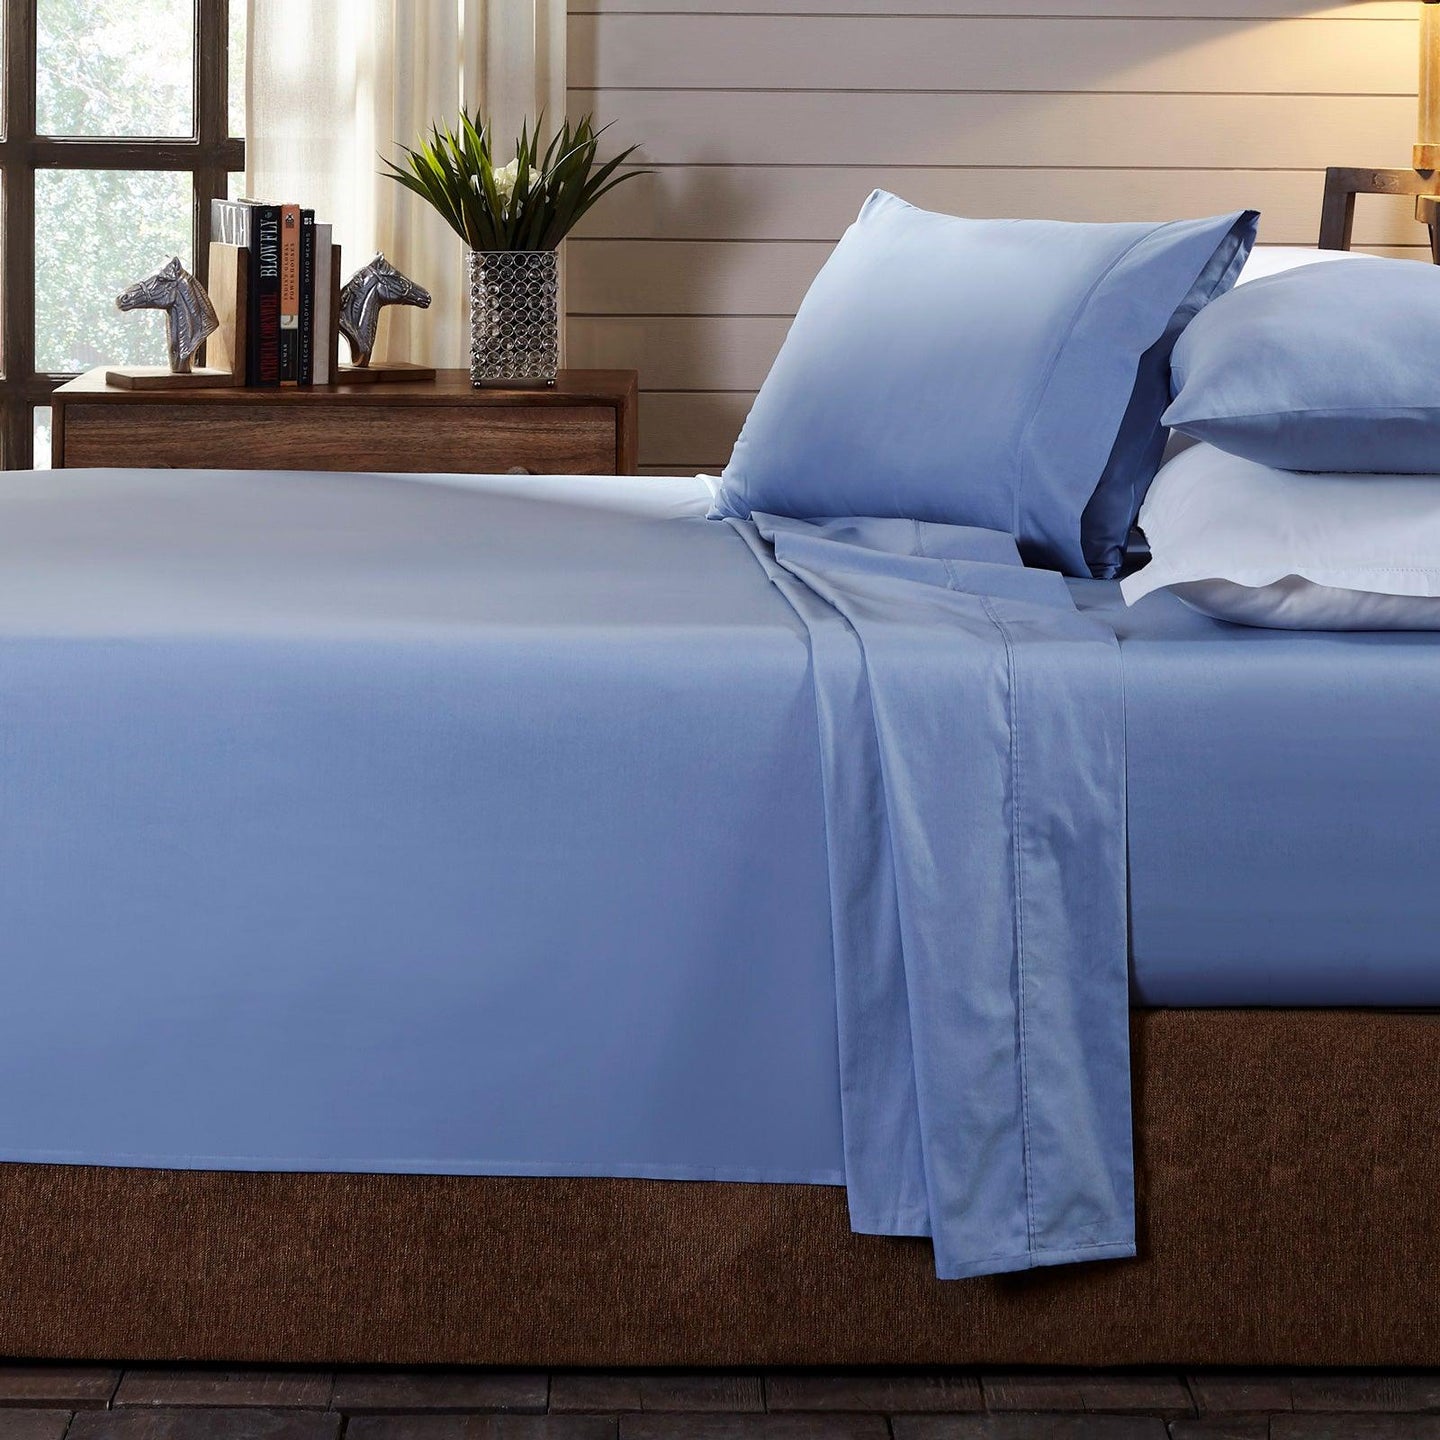 Buy Royal Comfort 250TC Organic 100% Cotton Sheet Set 4 Piece Luxury Hotel Style - King - Indigo discounted | Products On Sale Australia